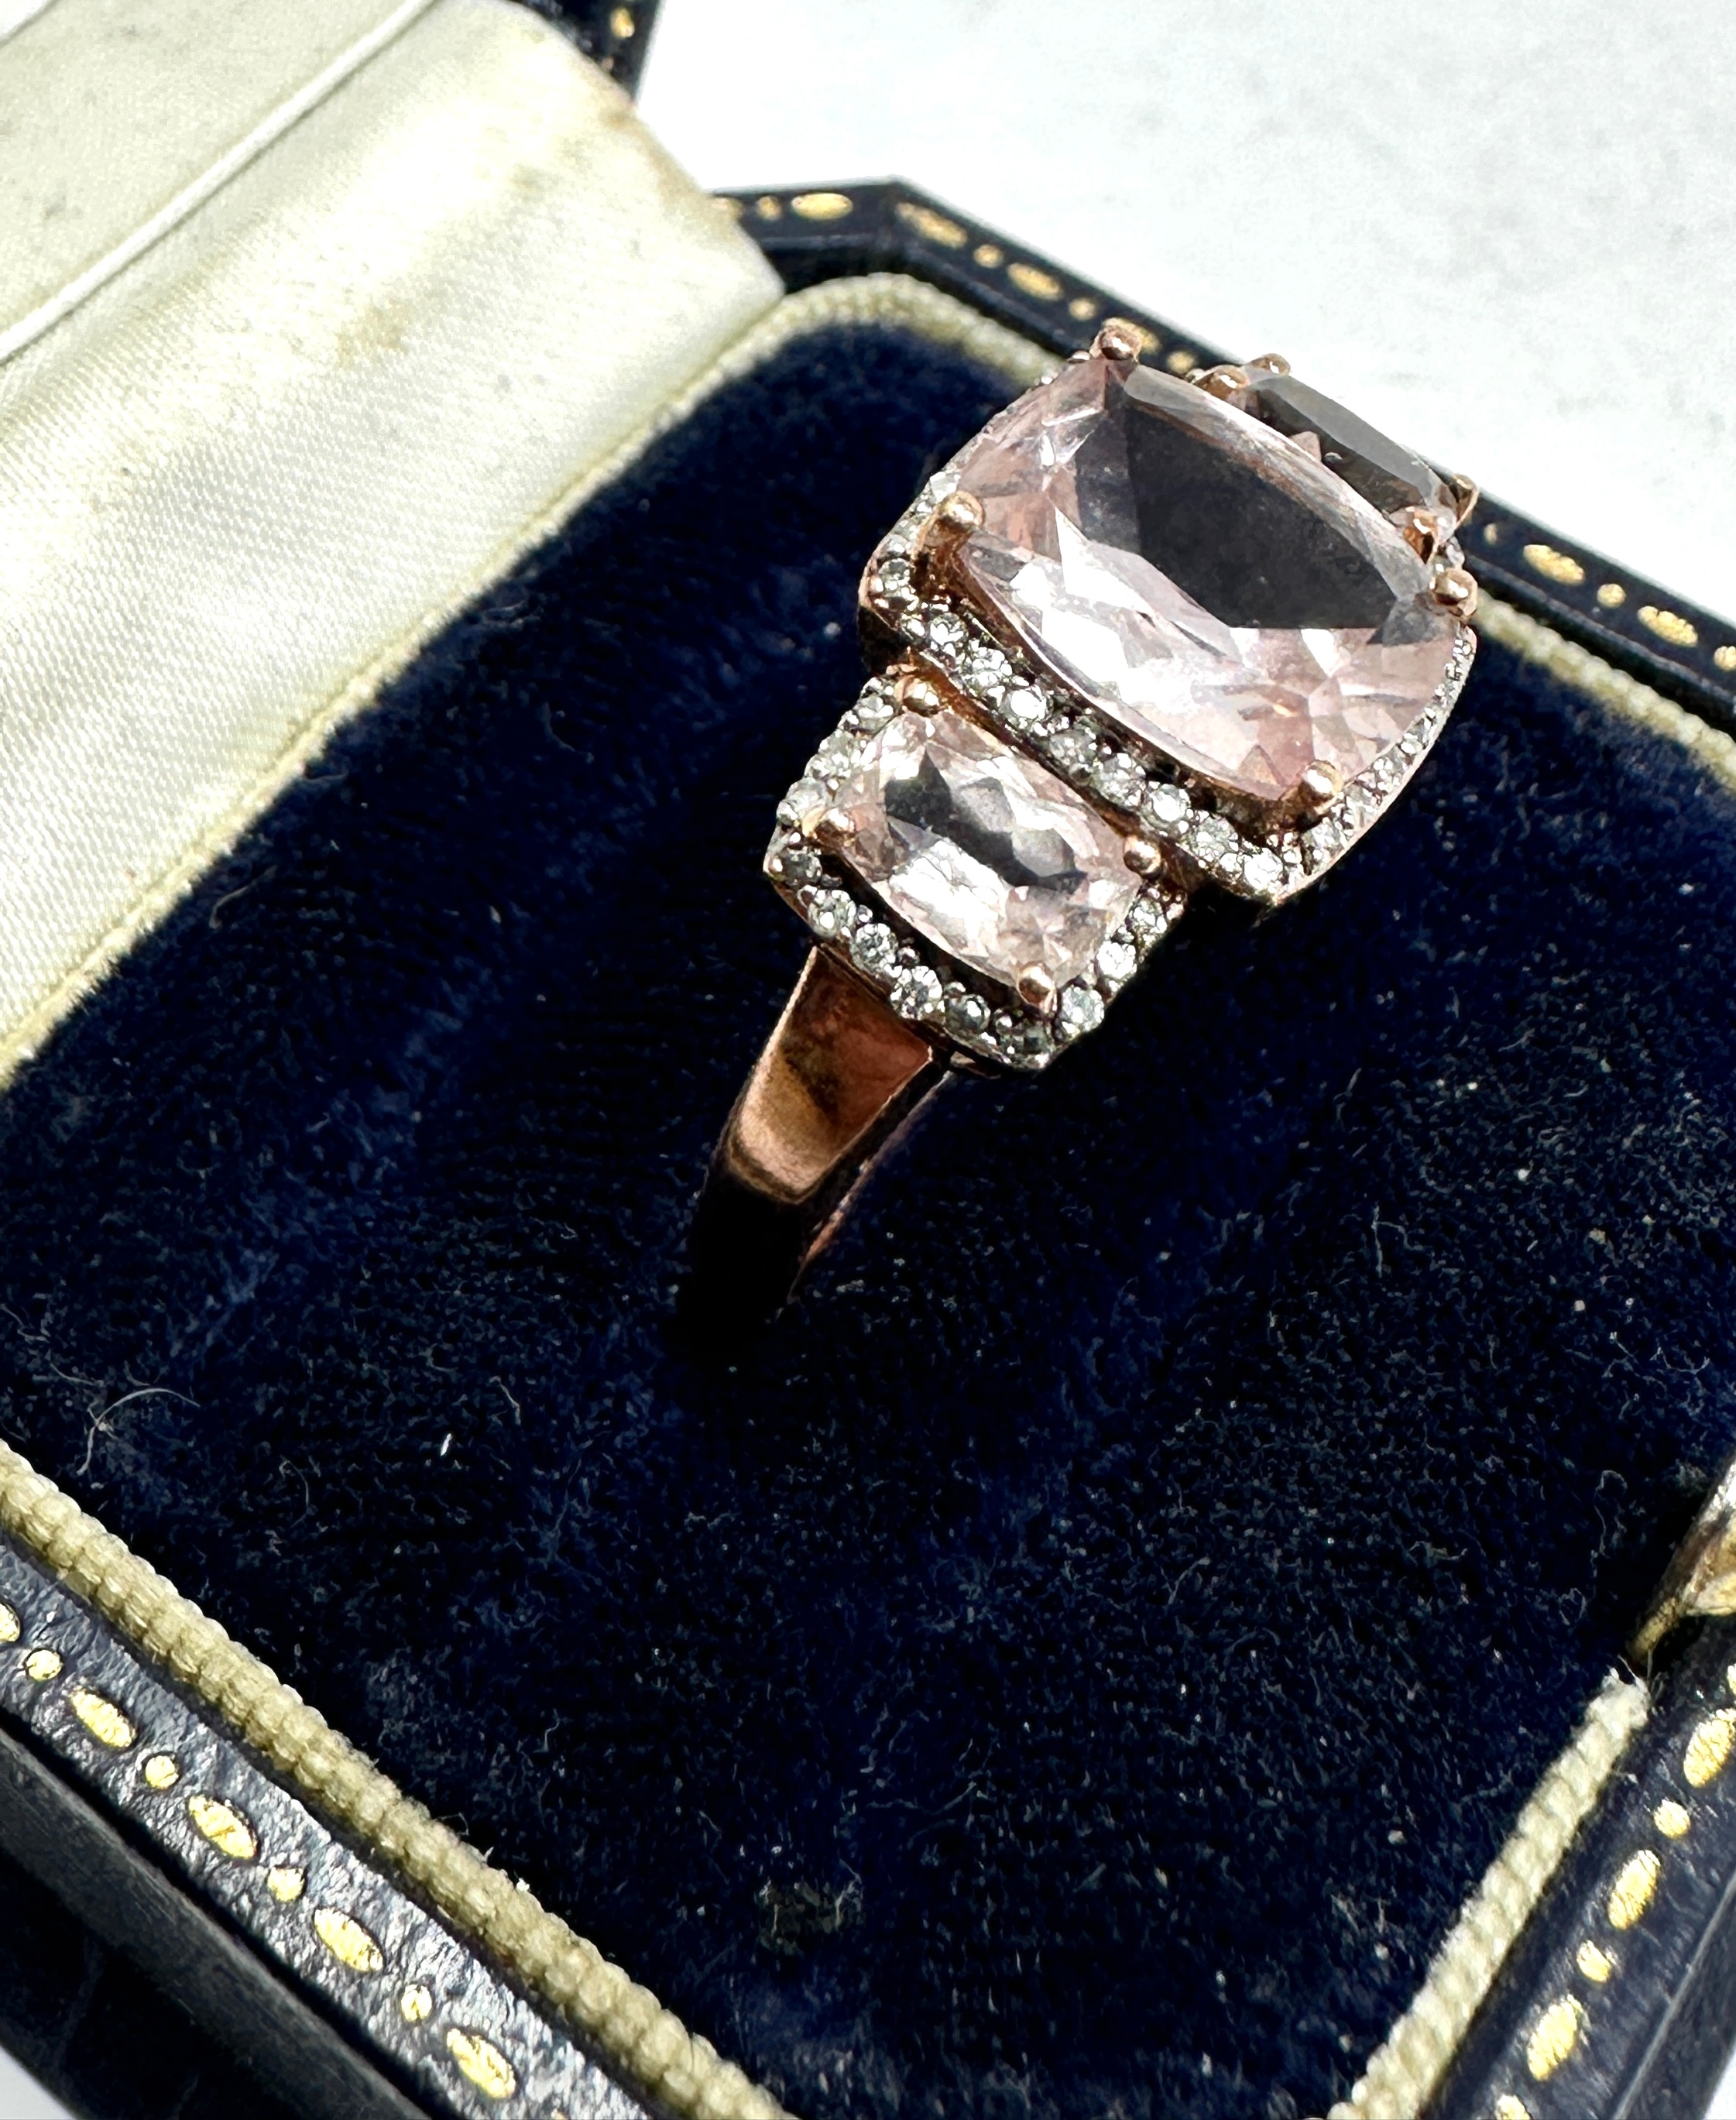 9ct gold diamond & light lilac gemstone ring weight 4g - Image 2 of 4